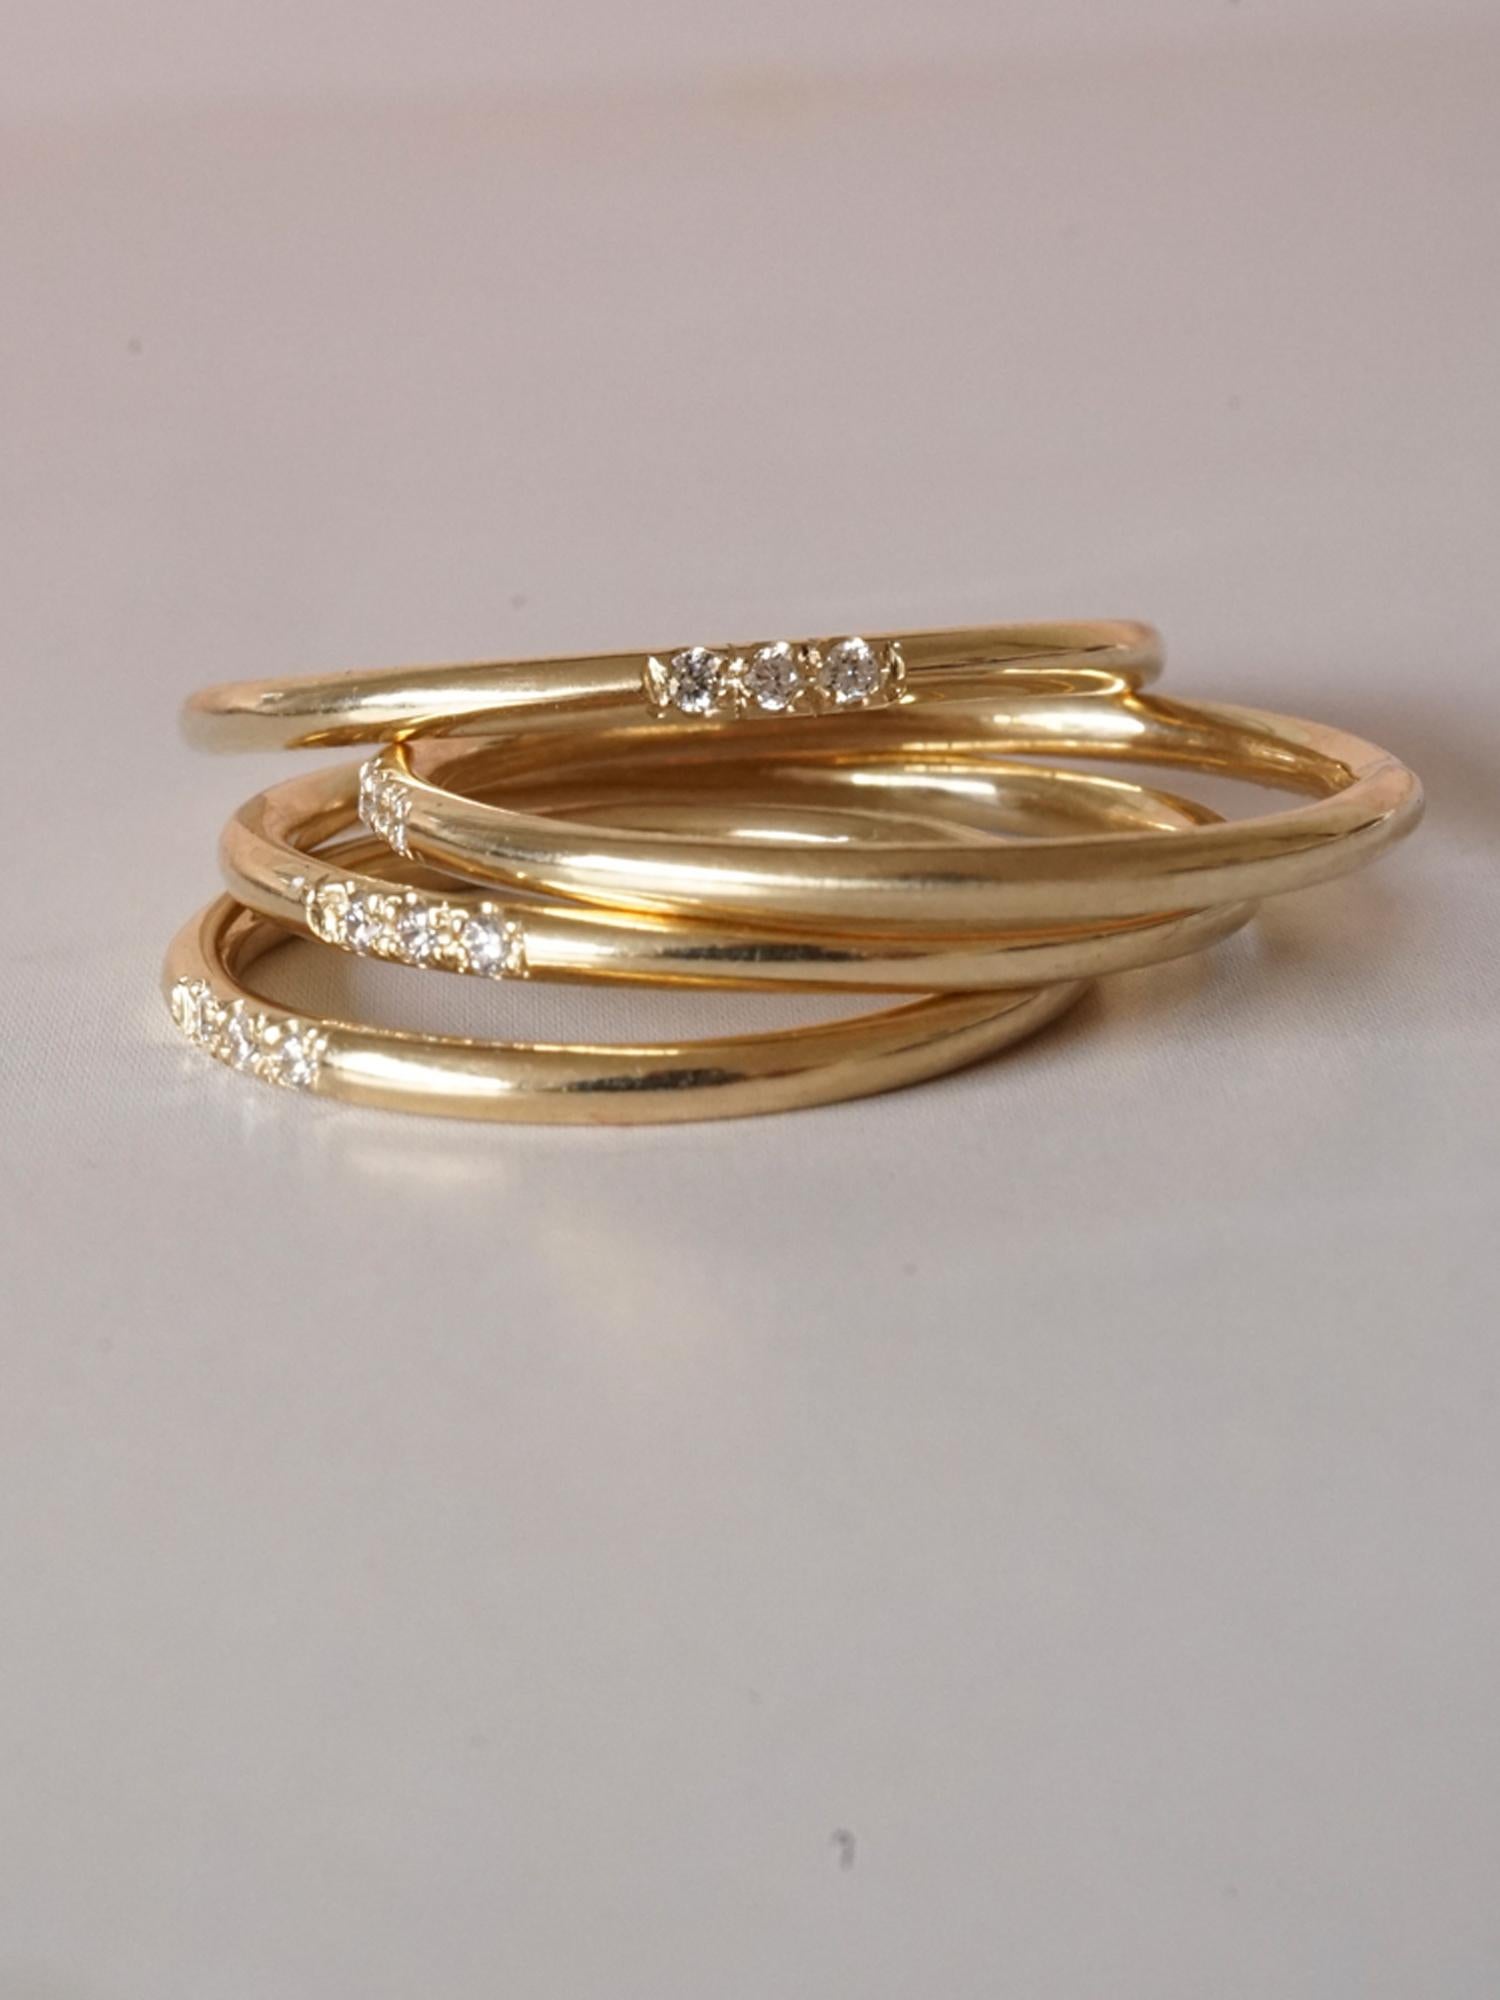 For Sale:  14 Karat Gold Diamond Trio Minimalist Band Ring by Mon Pilar Sizes 6